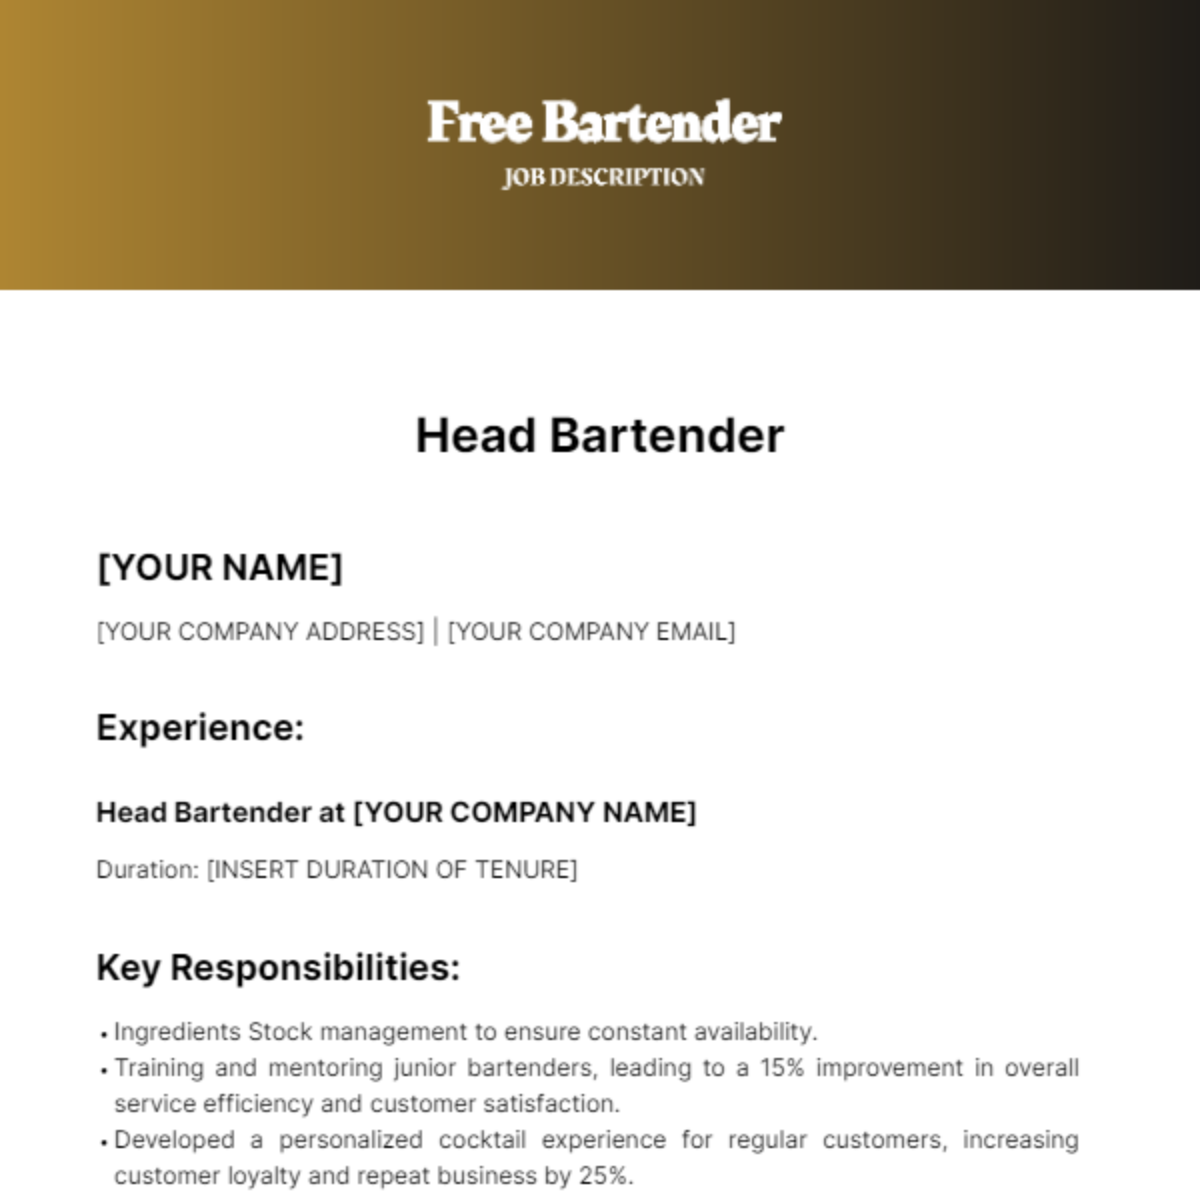 Free Bartender Job Description for Resume Template